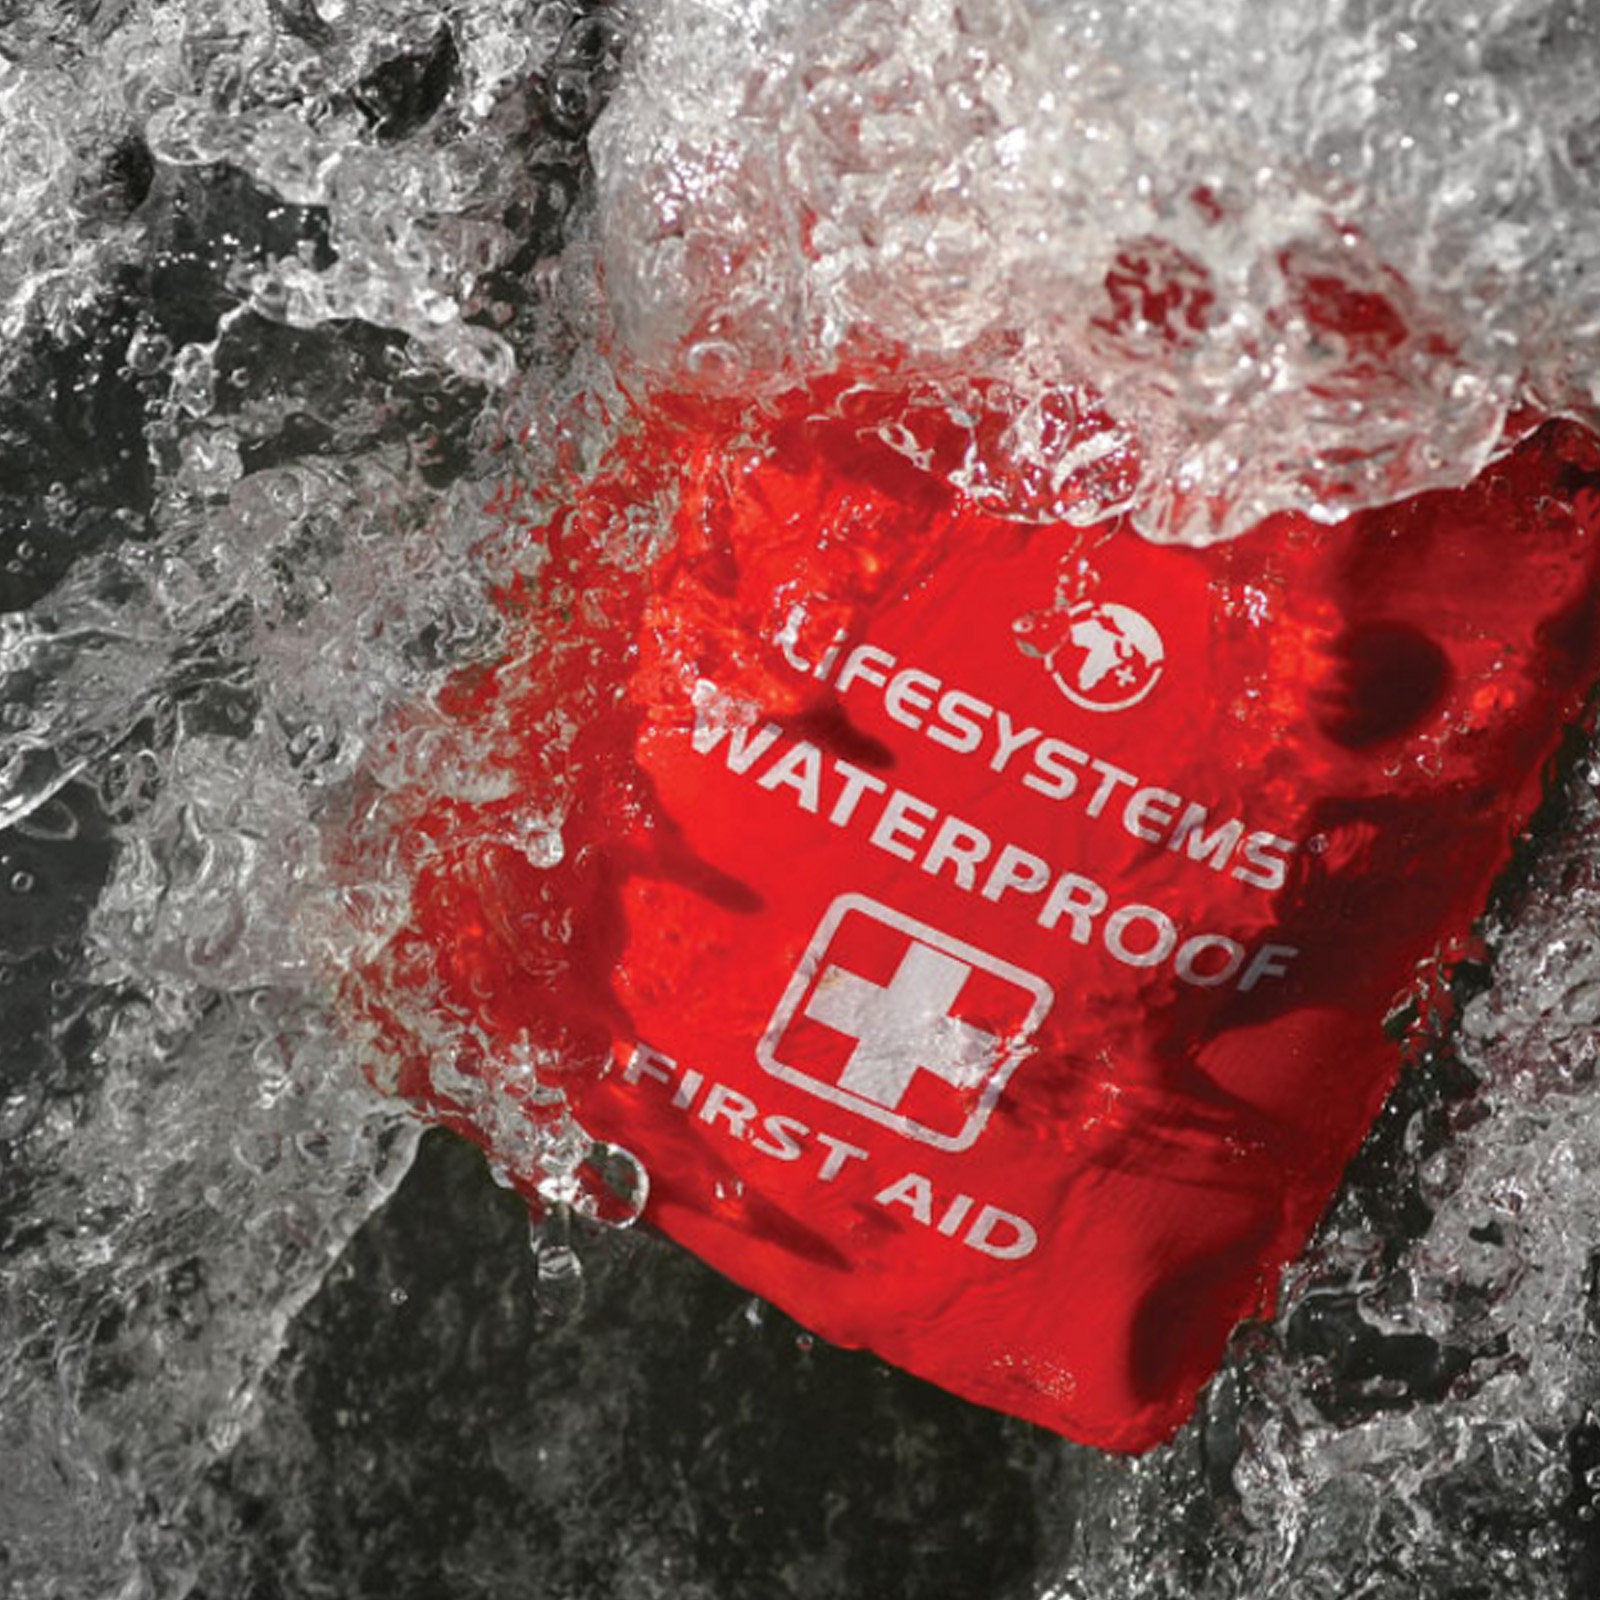 LS waterproof first aid kit 3